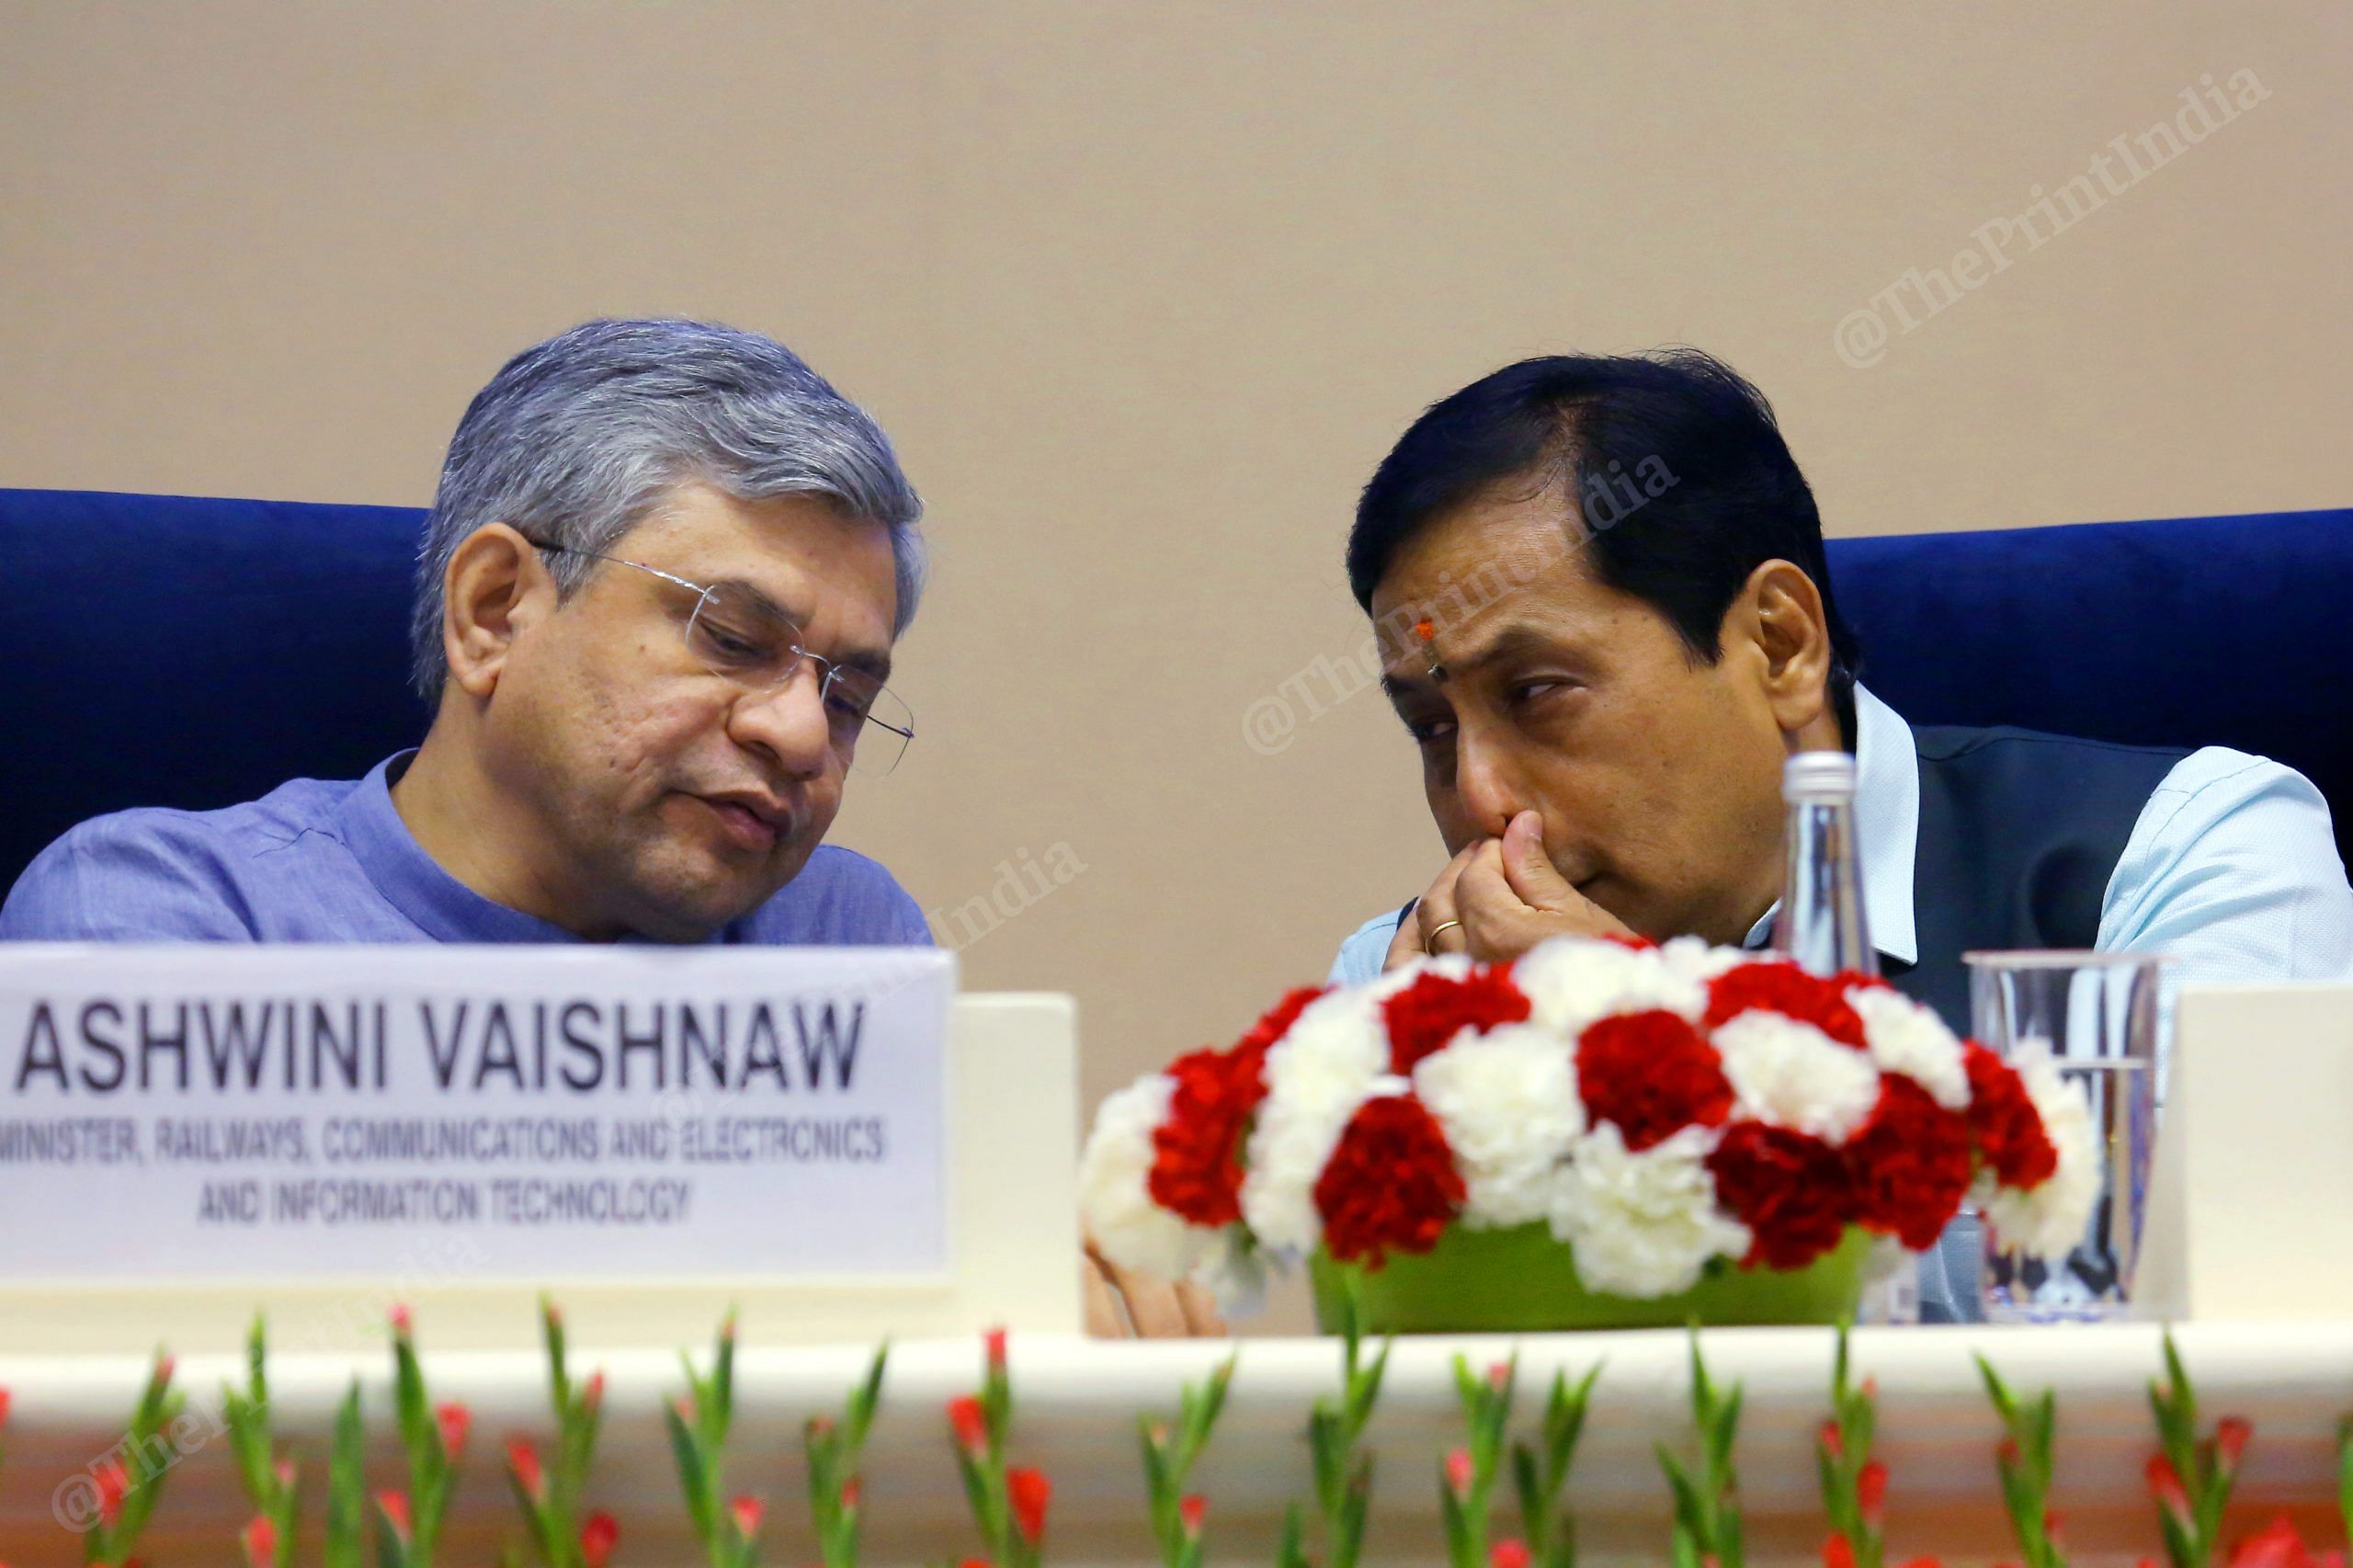 Vaishnaw and Sonowal talk during the event | Photo: Praveen Jain | ThePrint